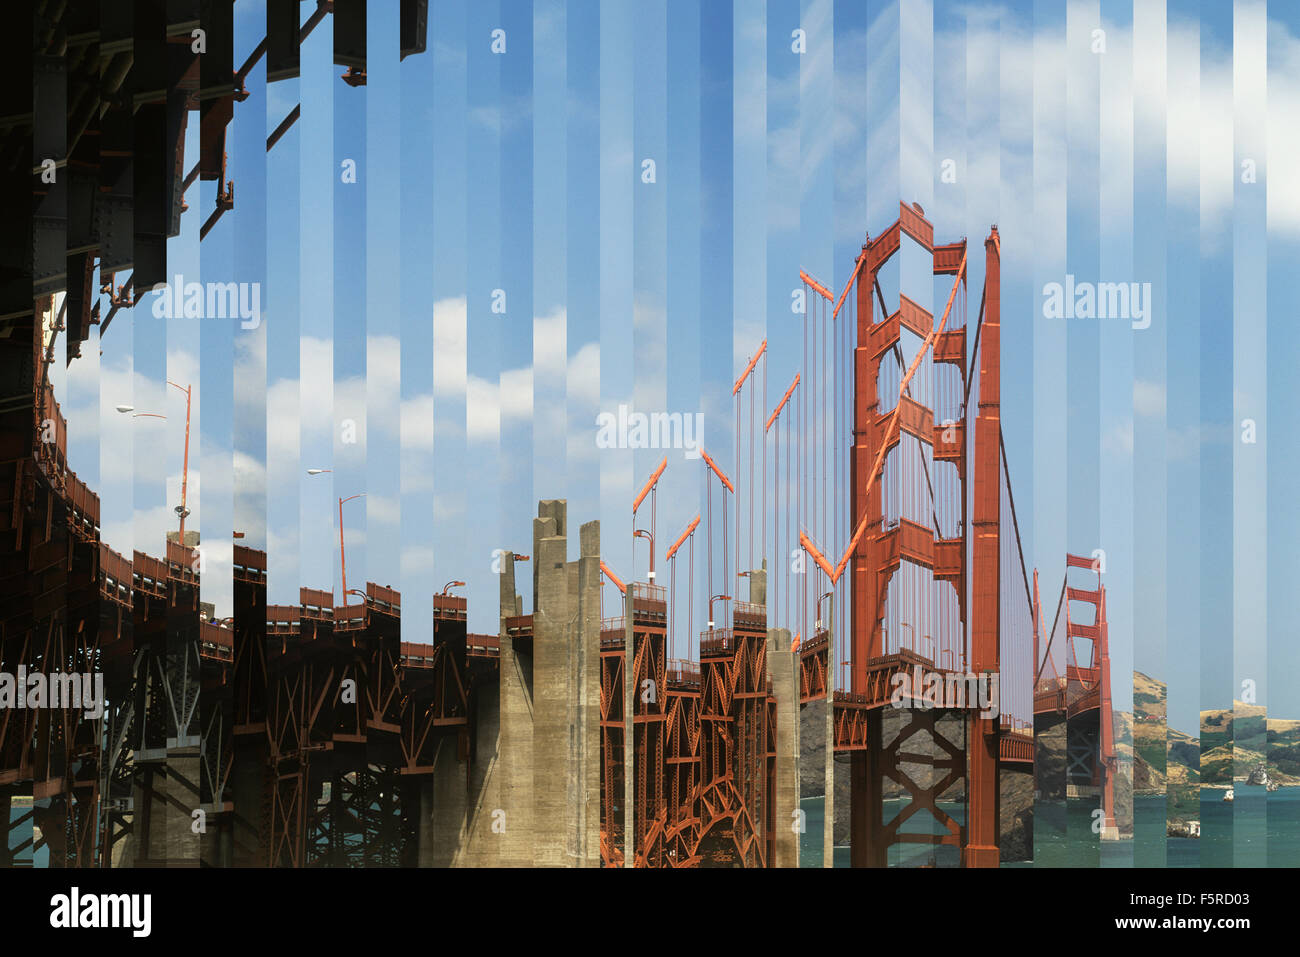 Golden Gate Bridge Viewed Through Distorted Glass Stock Photo